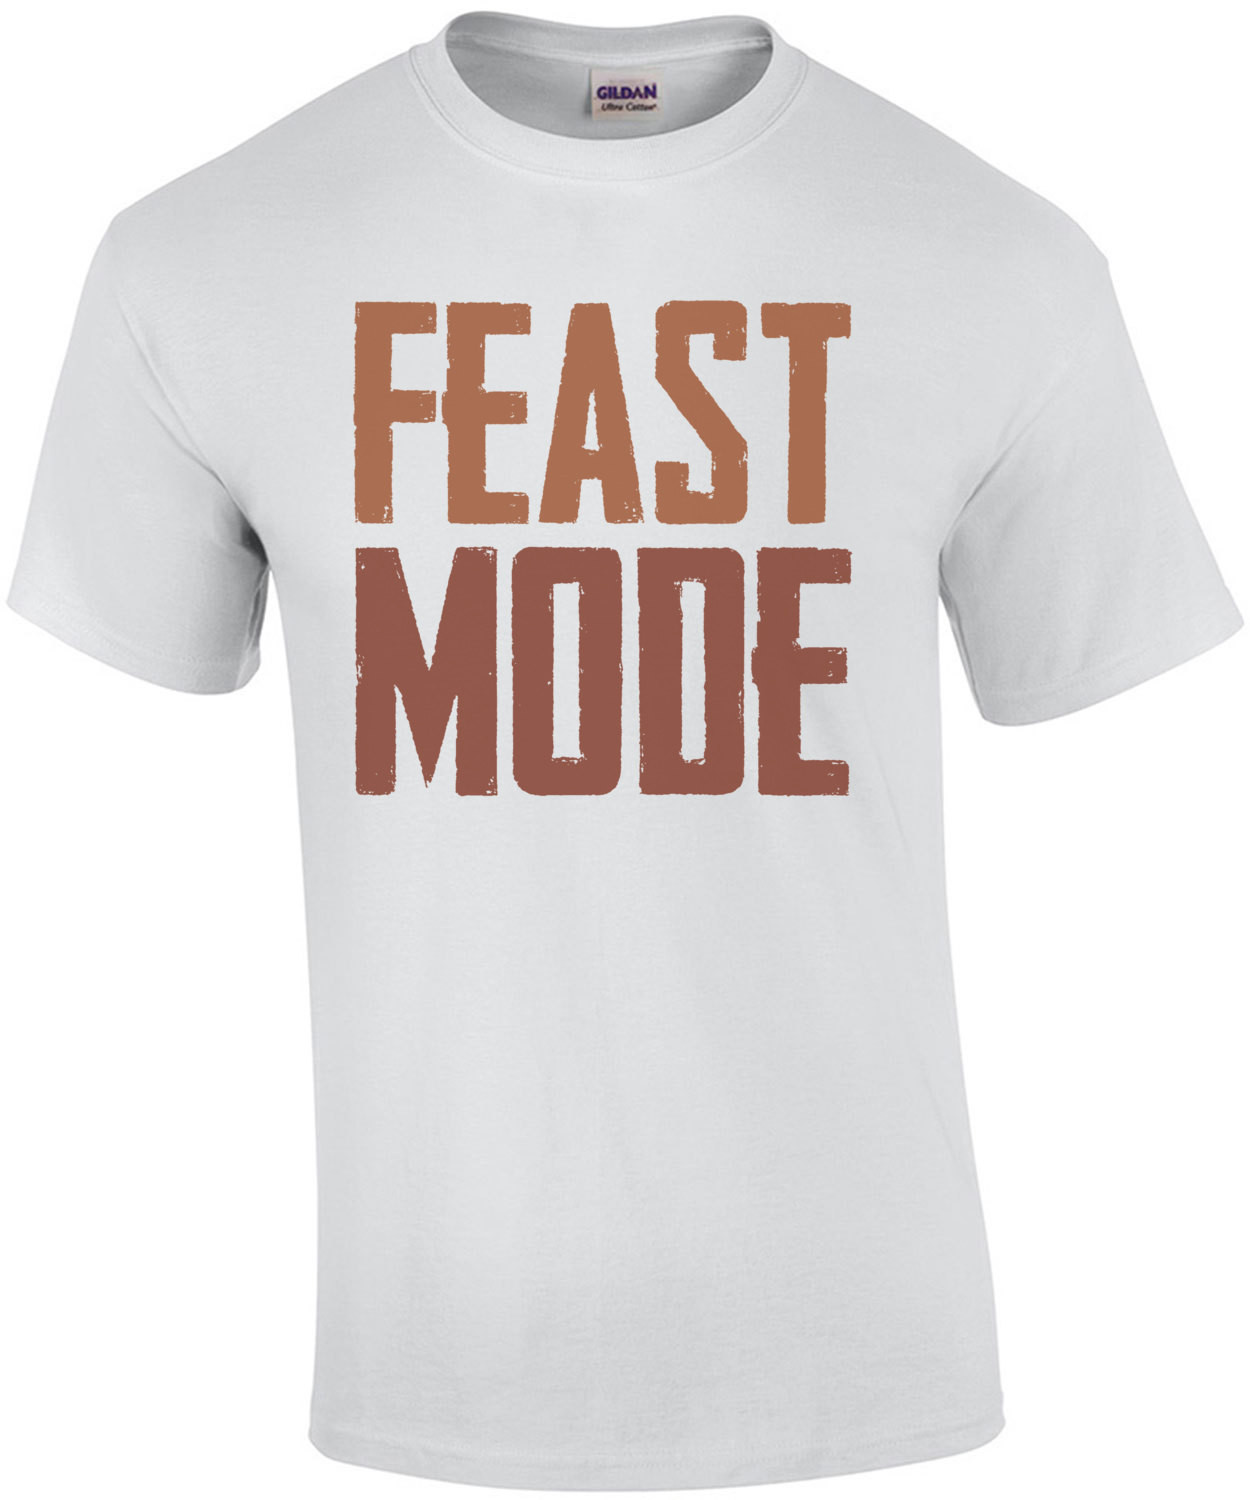 Feast Mode - Funny thanksgiving t-shirt